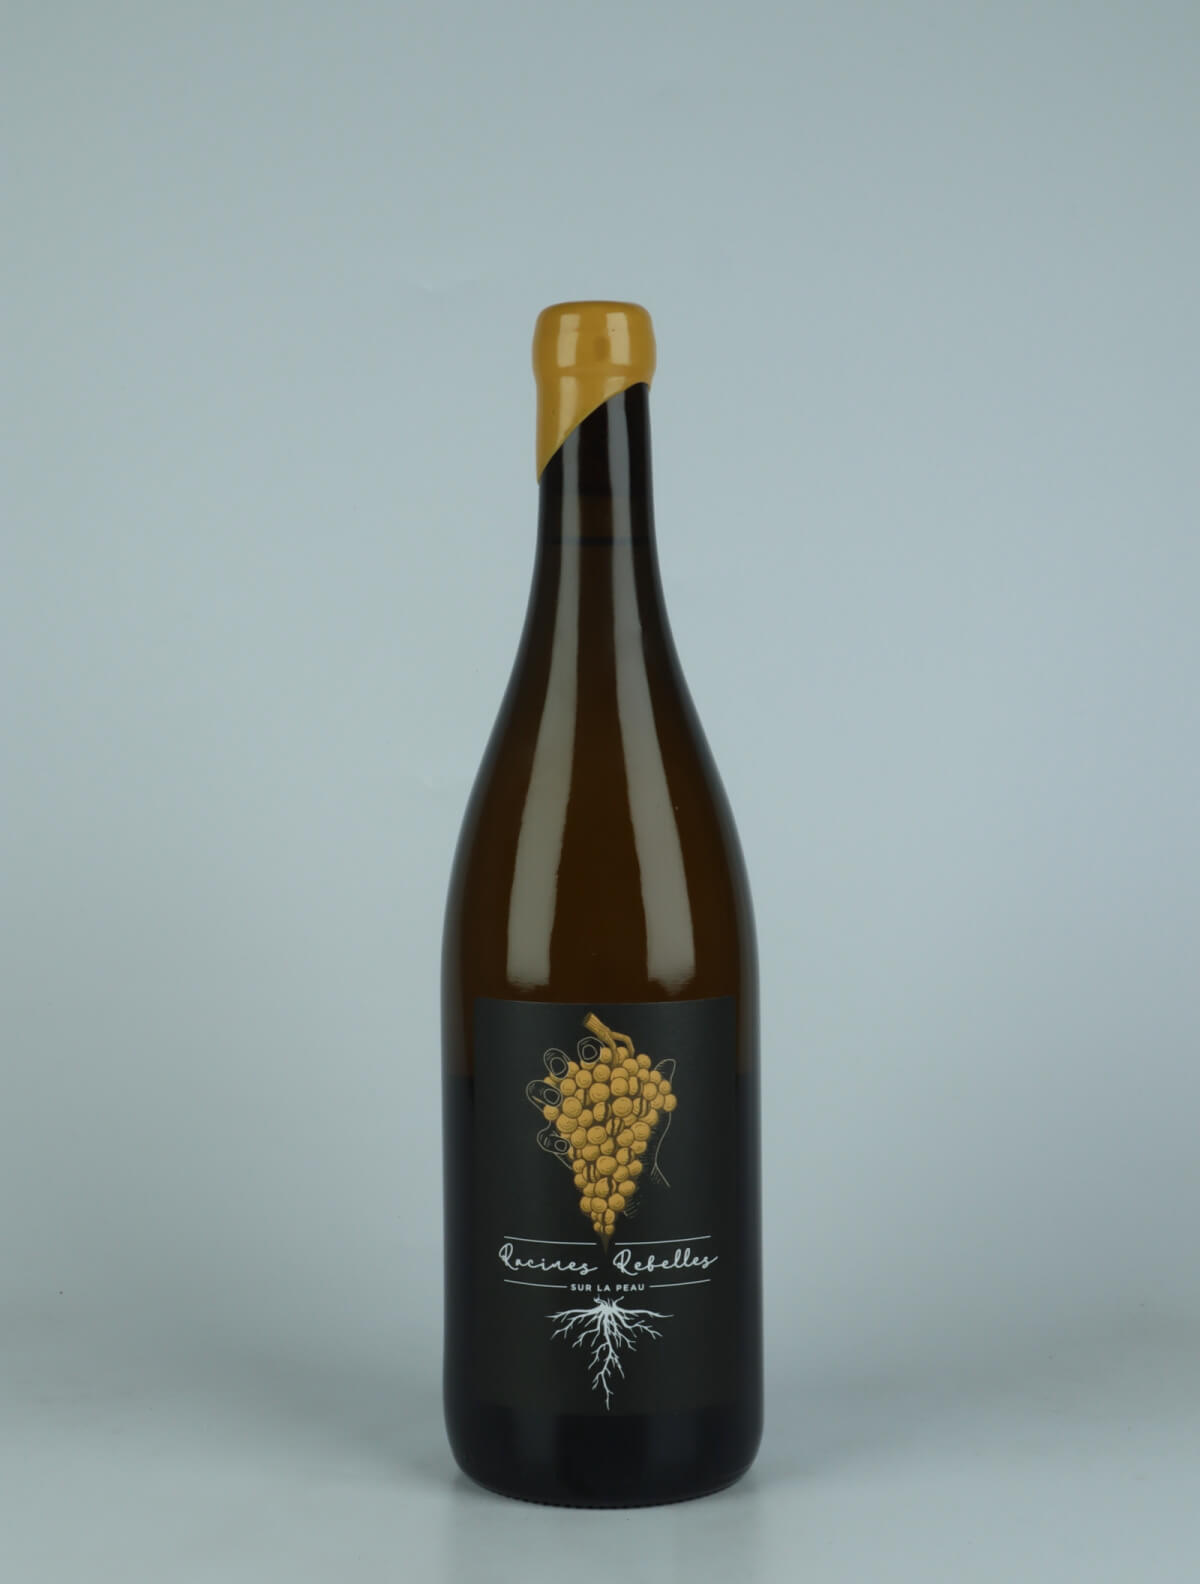 A bottle 2022 Sur la Peau White wine from Racines Rebelles, Moselle in Luxemburg